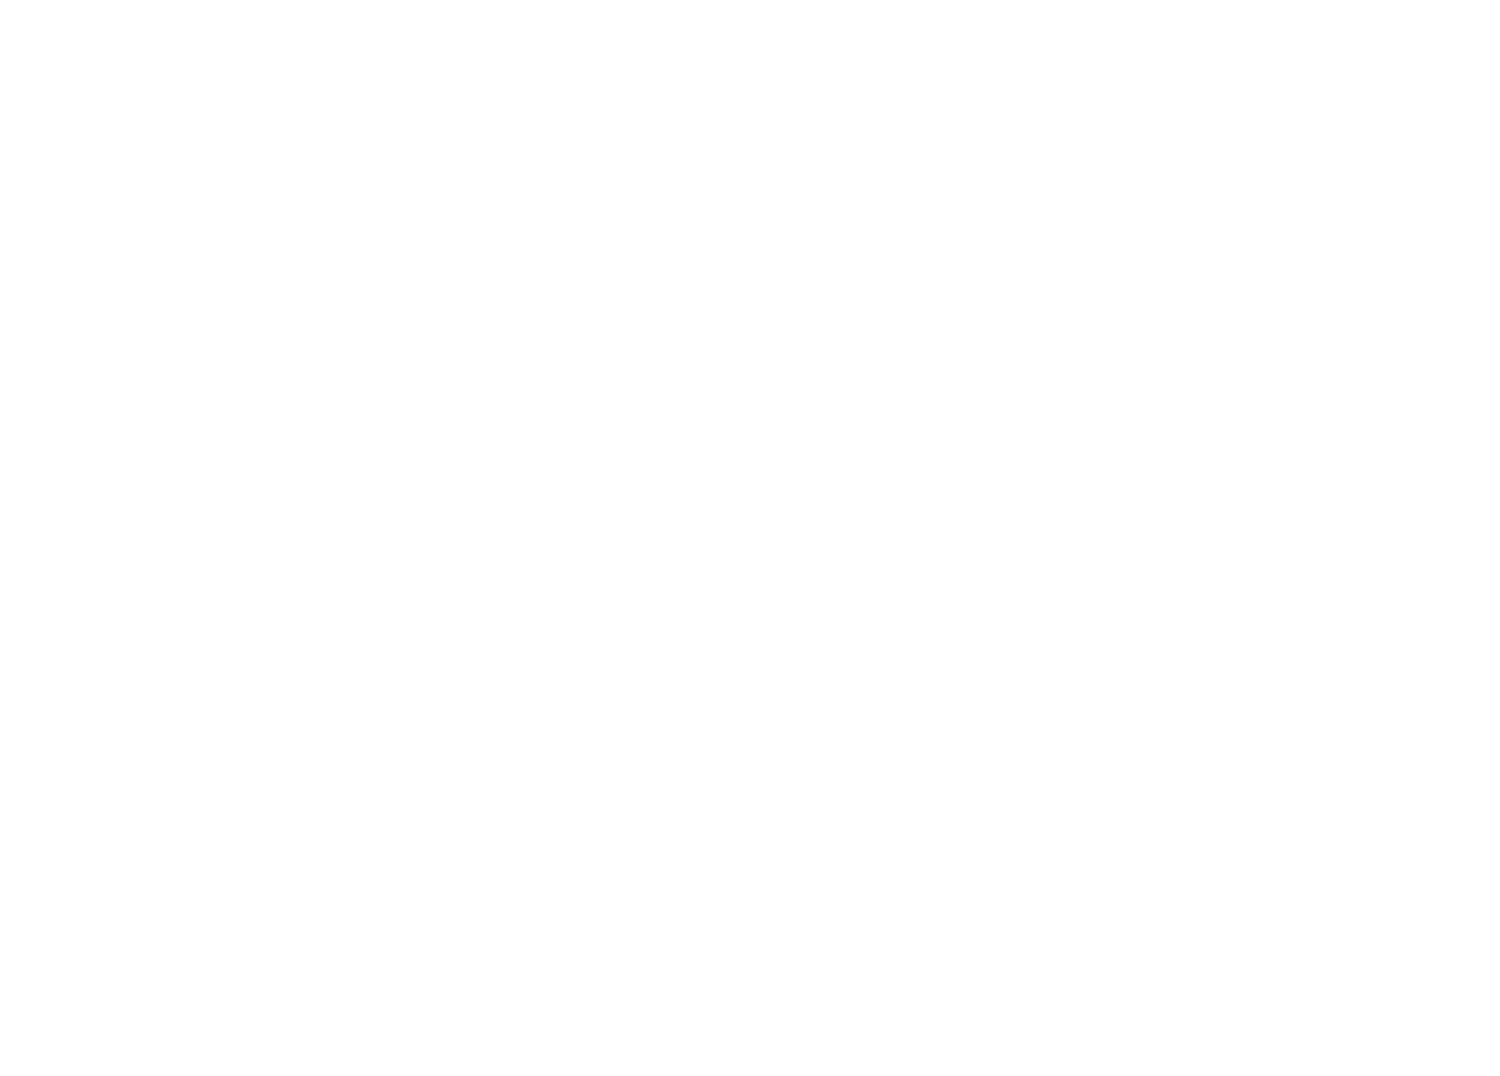 Incense: Pray Through Life